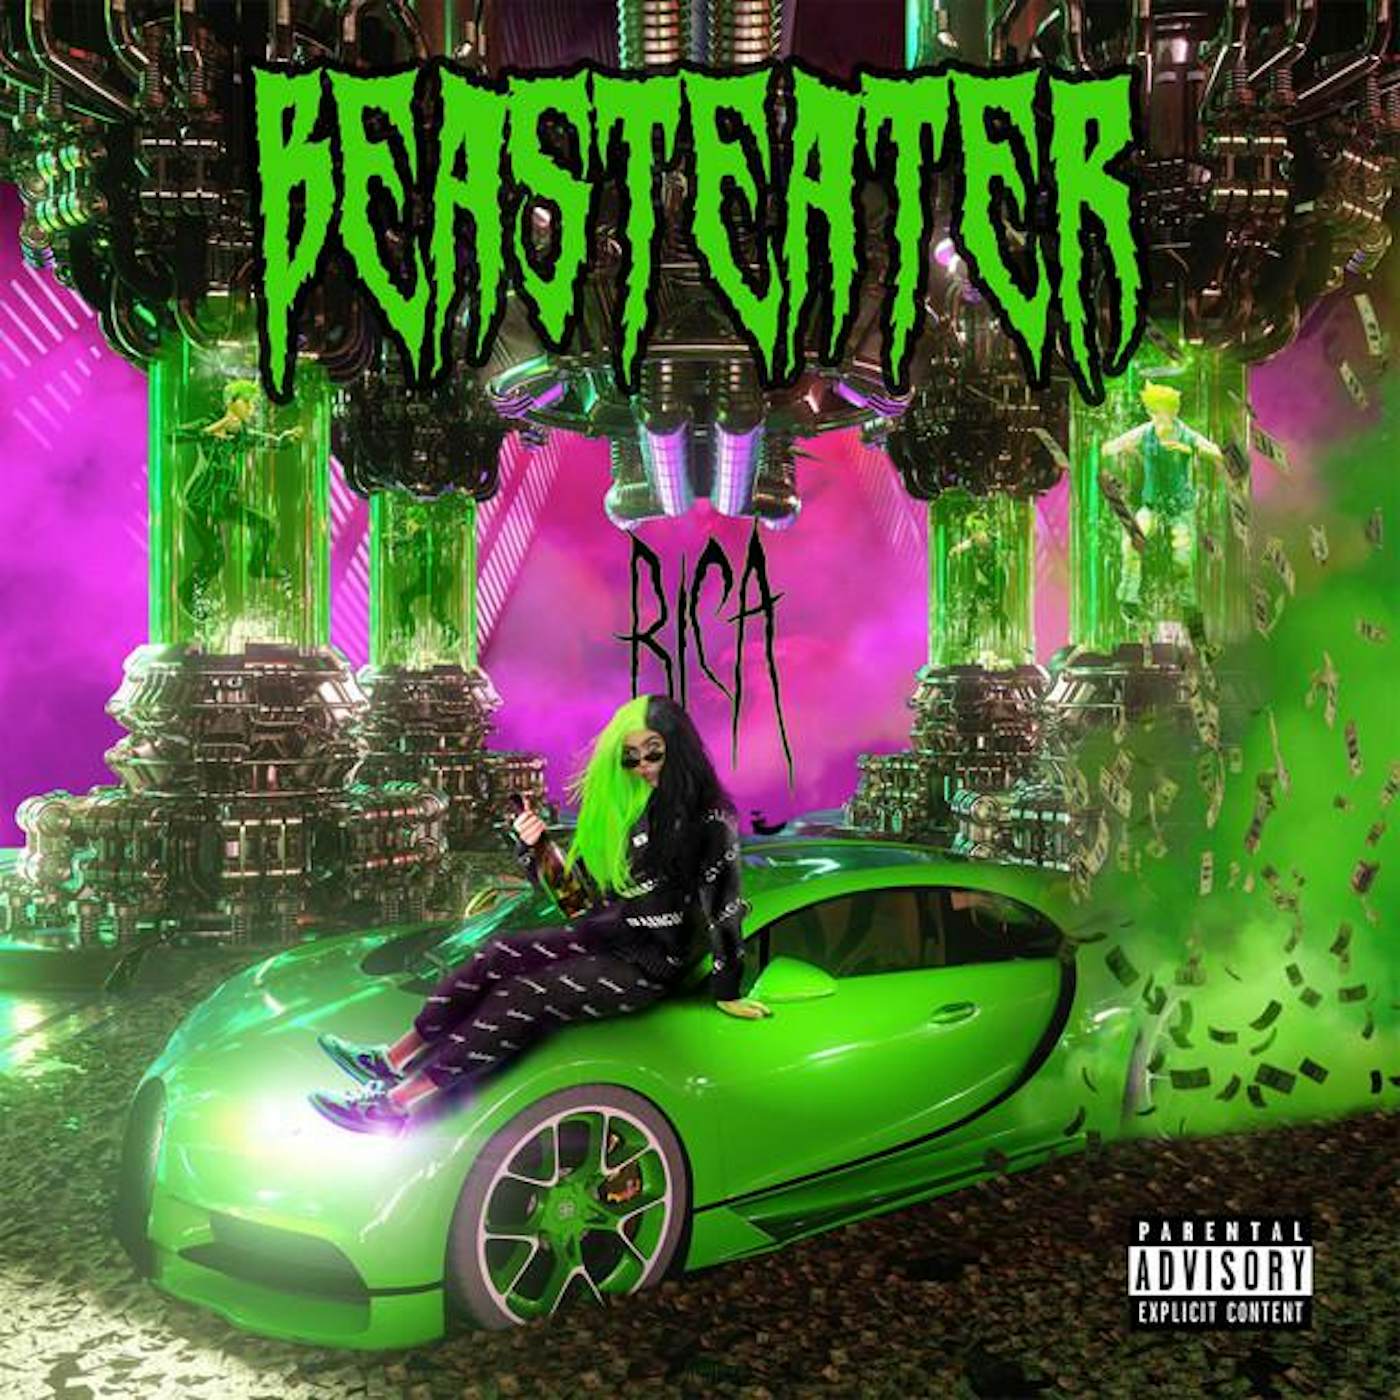 Beasteater